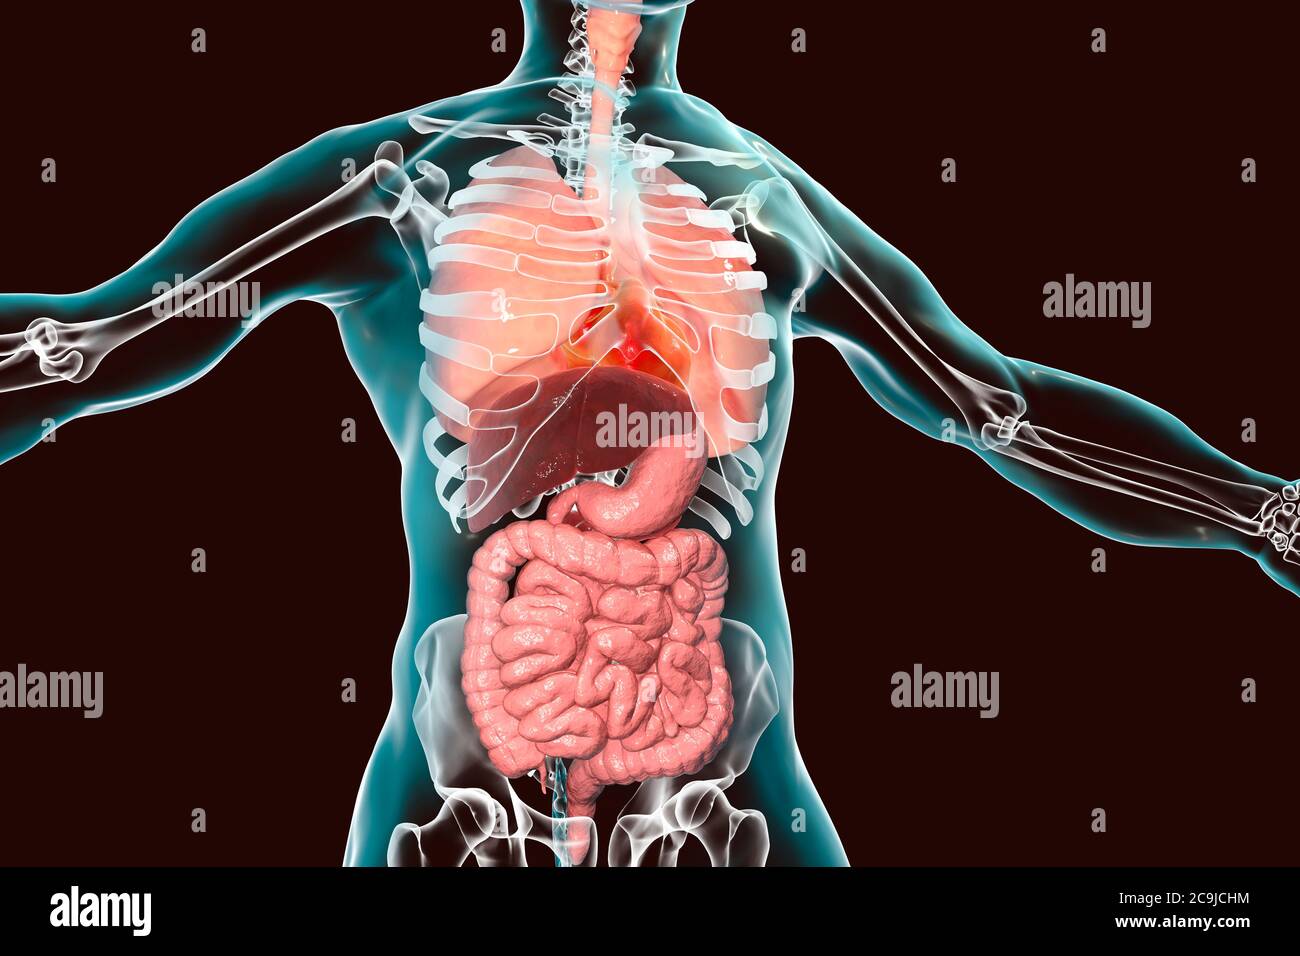 Human body anatomy, respiratory and digestive systems, computer illustration. Stock Photo